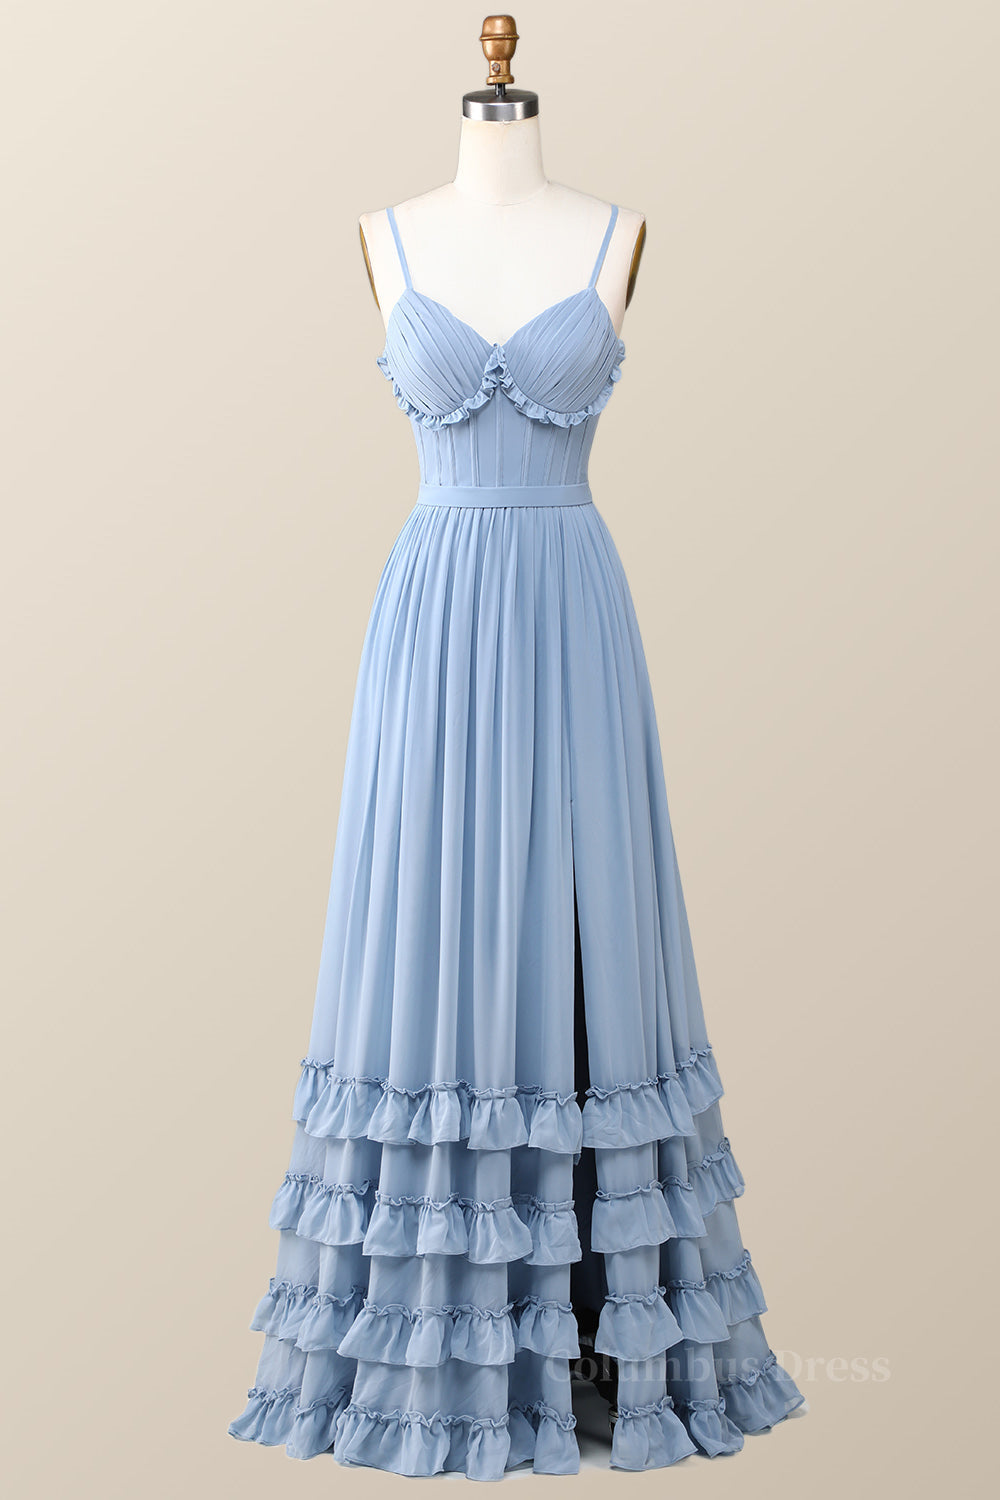 Boho Style Dusty Blue Ruffles Long Corset Bridesmaid Dress outfit, Backless Prom Dress